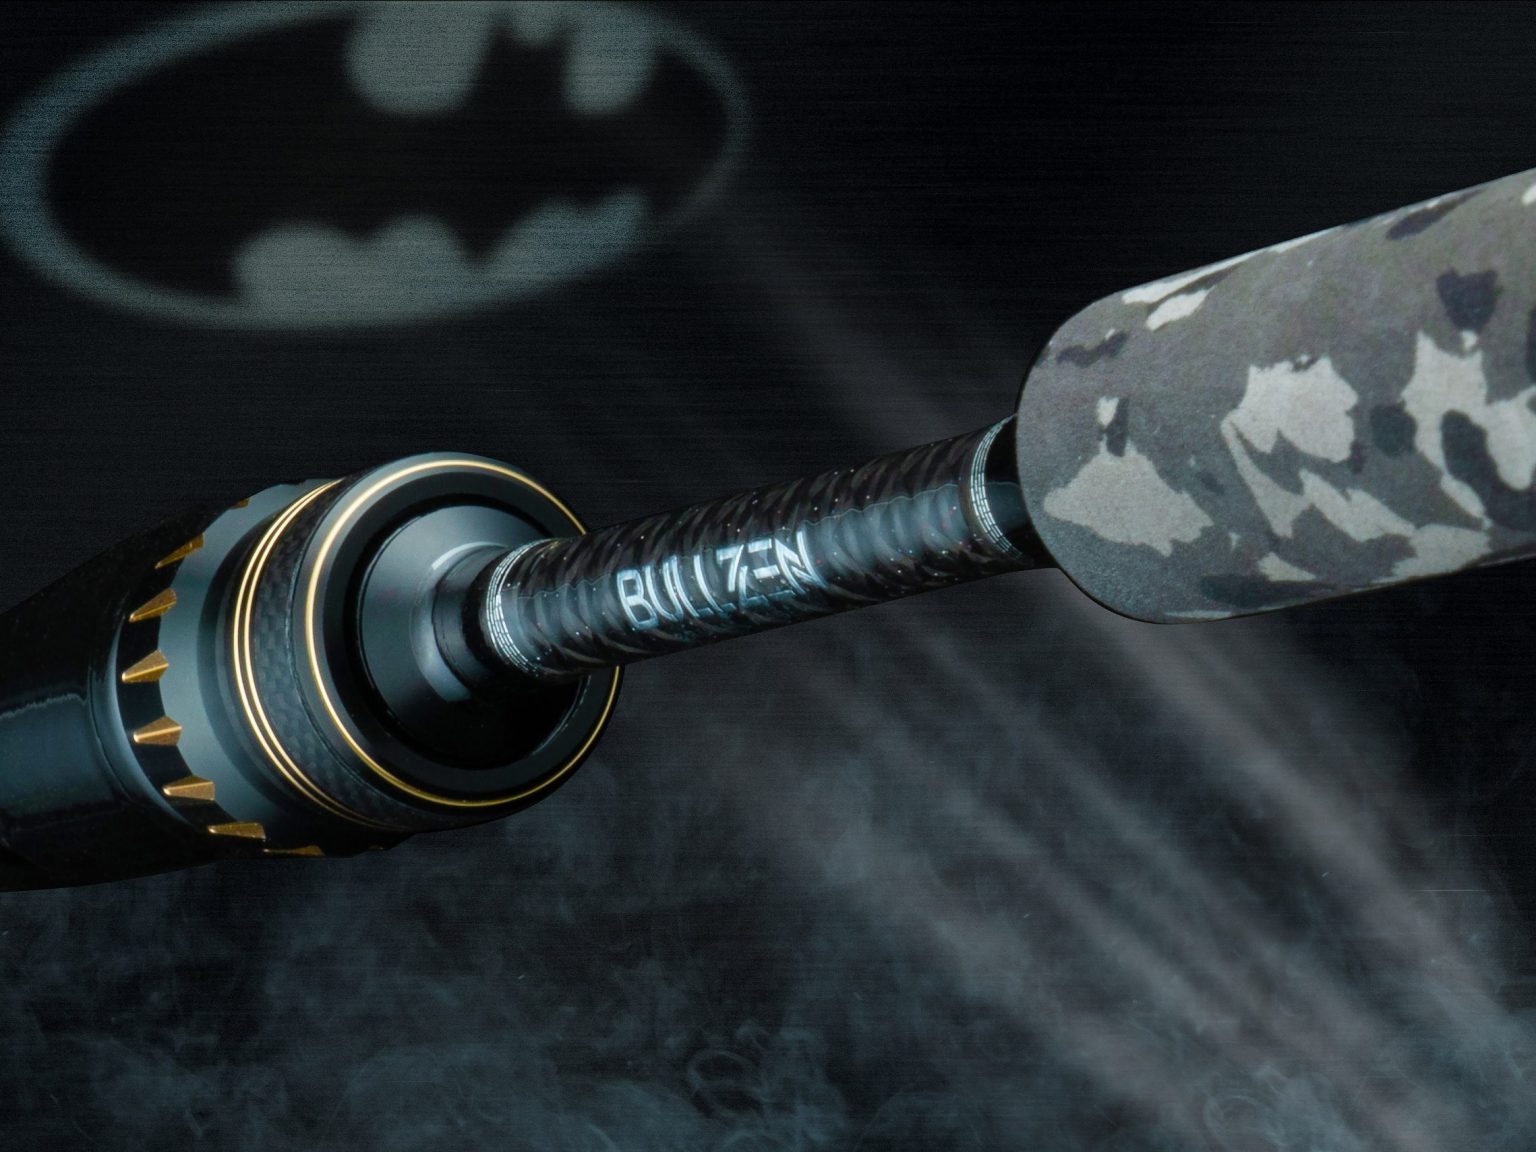 Bullzen Batman The Caped Crusader – Limited Edition 